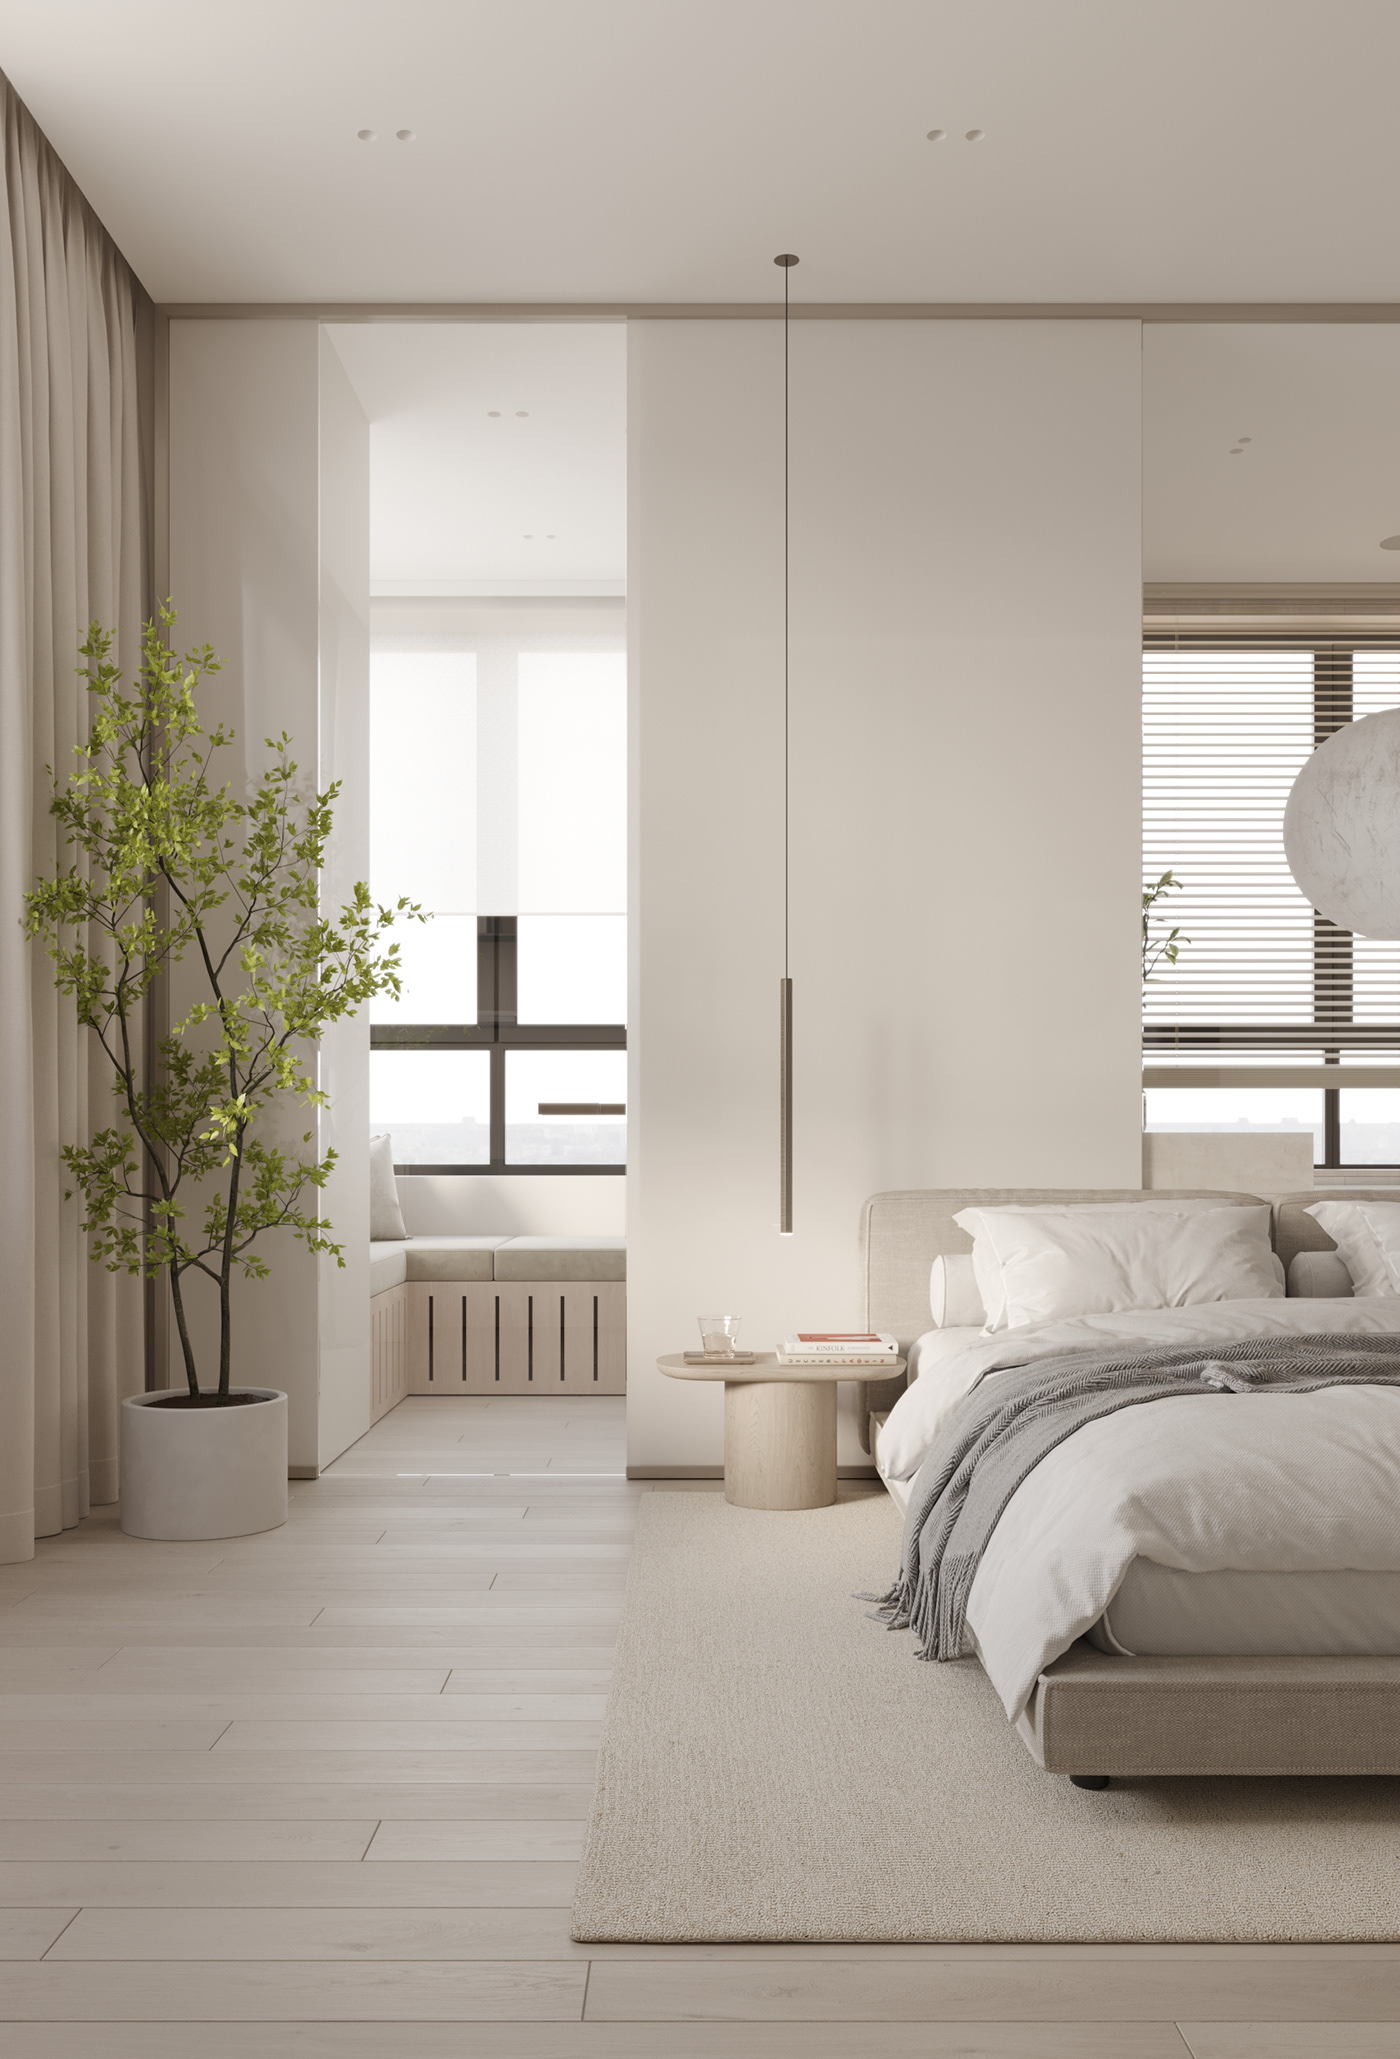 archviz 3ds max Render apartment интерьер дизайн интерьера visualization Визуализация интерьера Интерьер квартиры